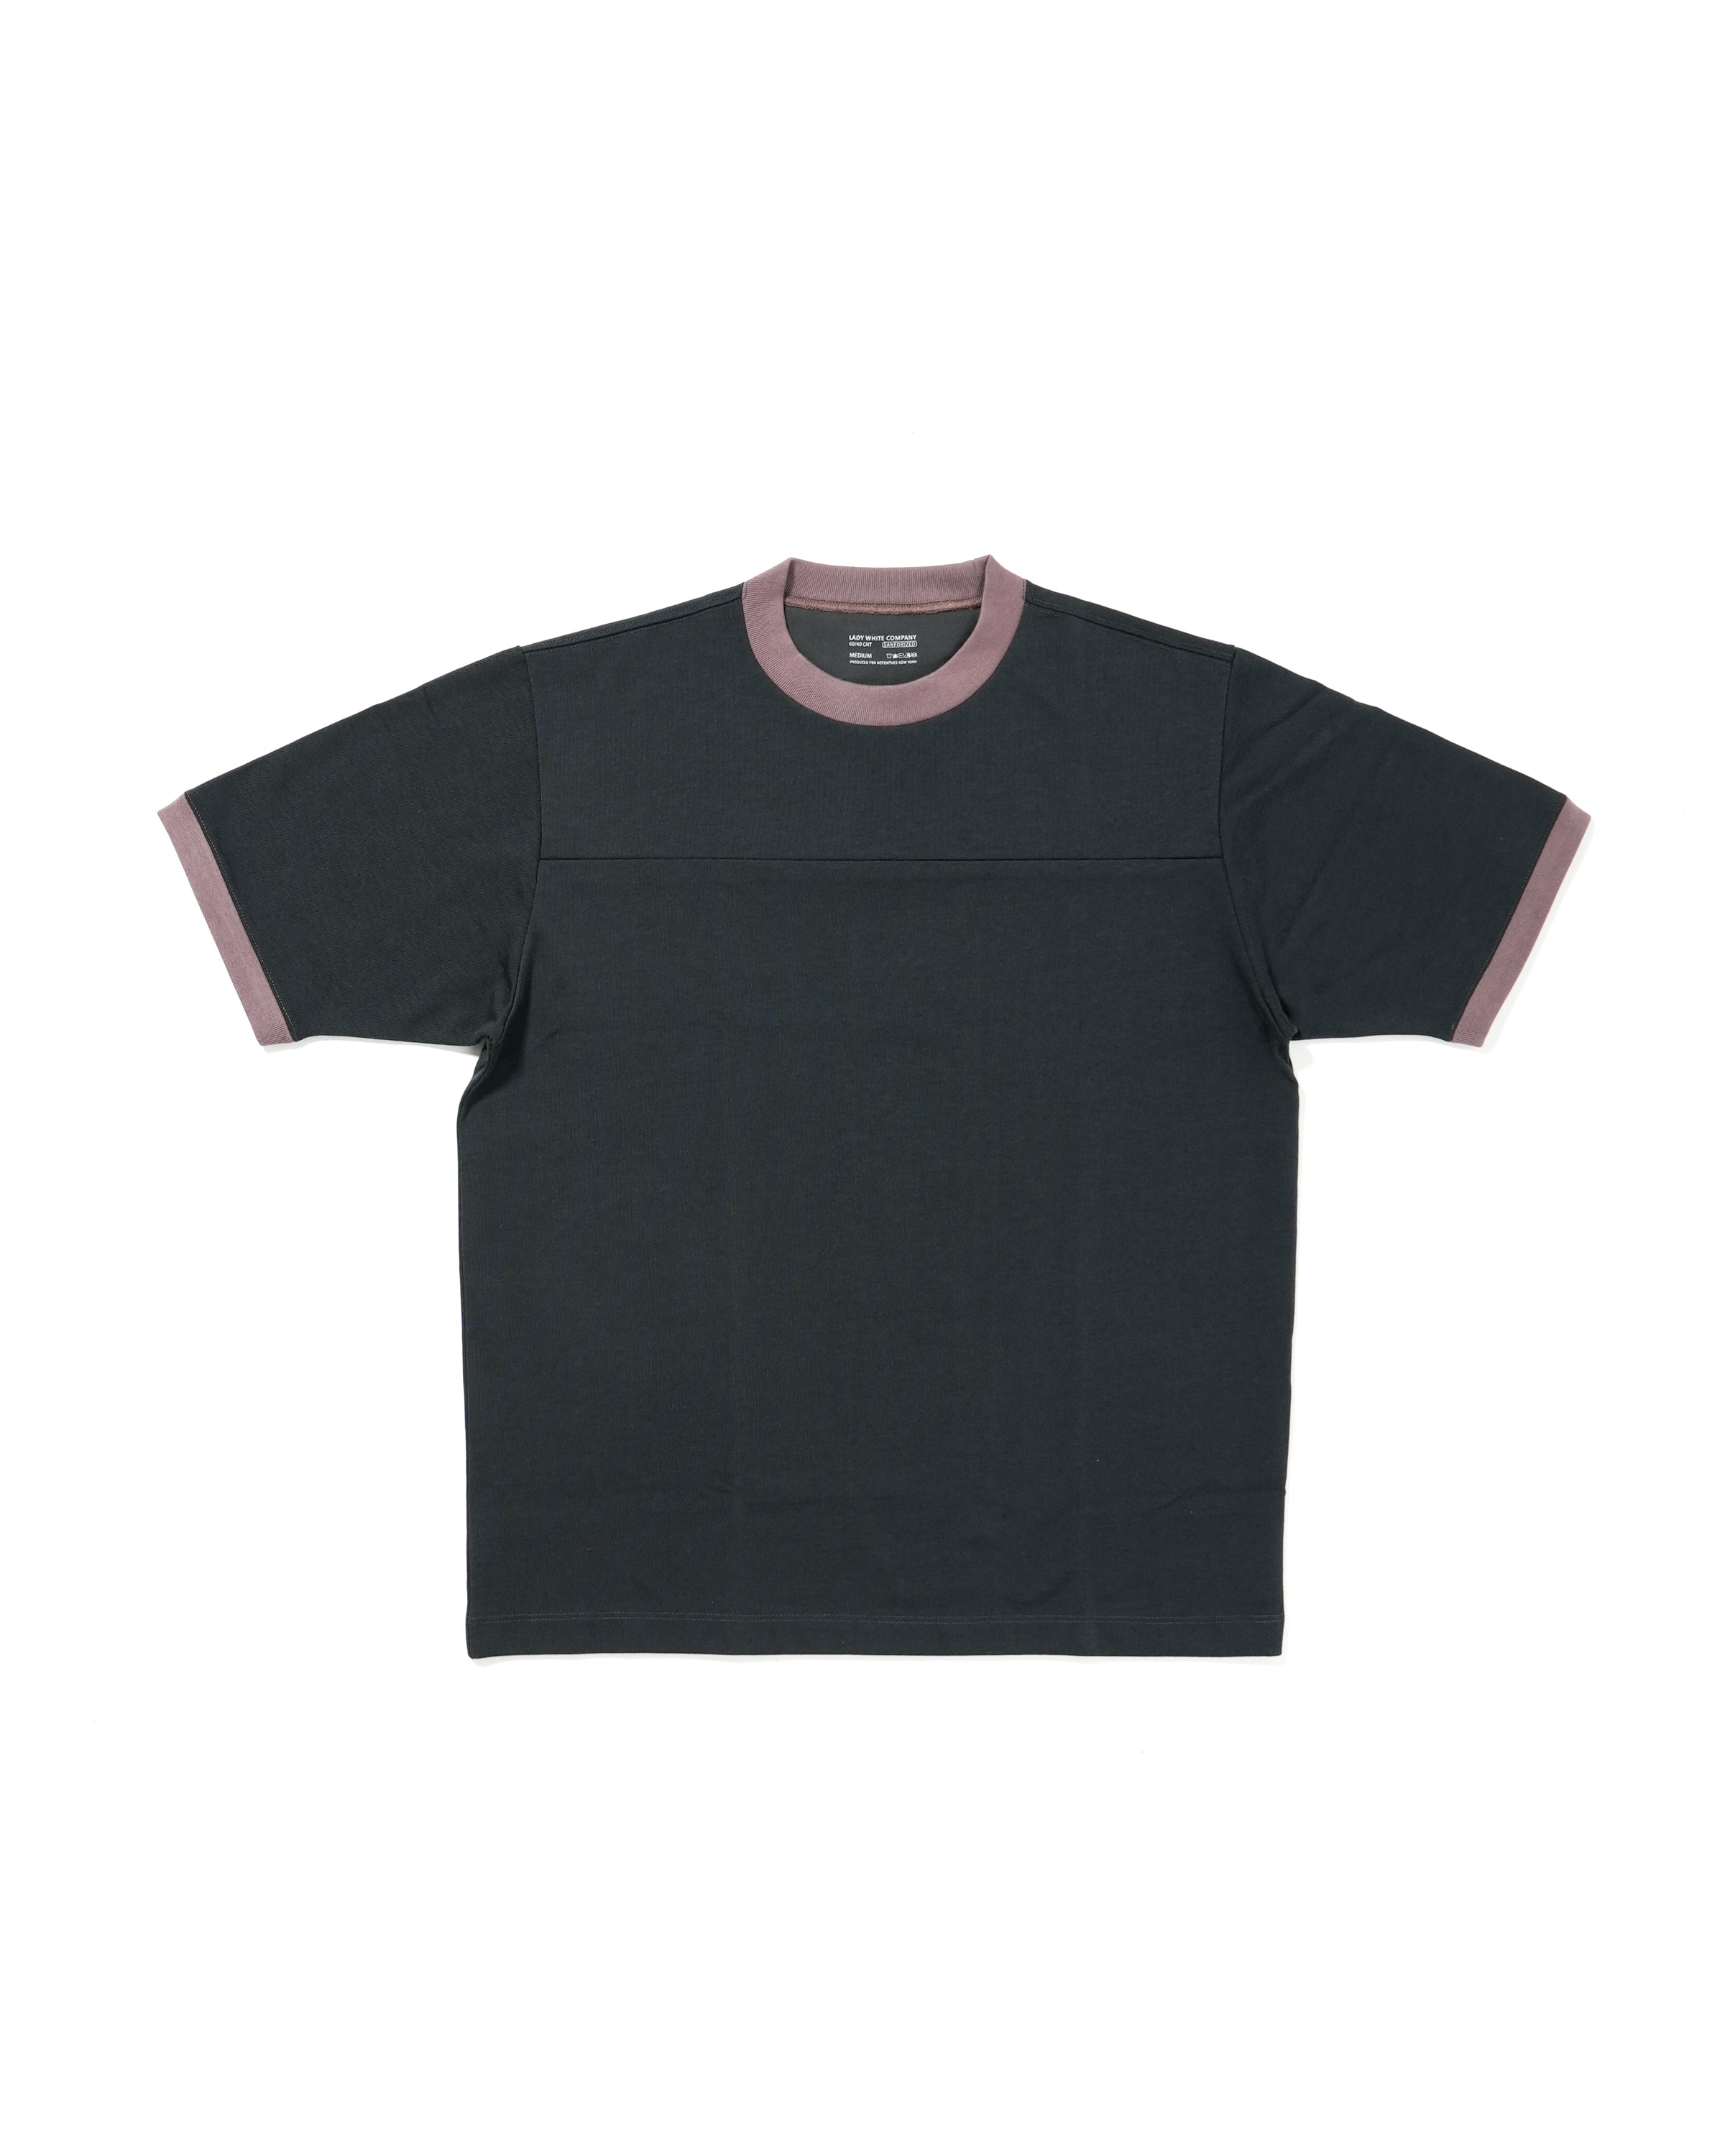 Ringer T-Shirt - Charcoal